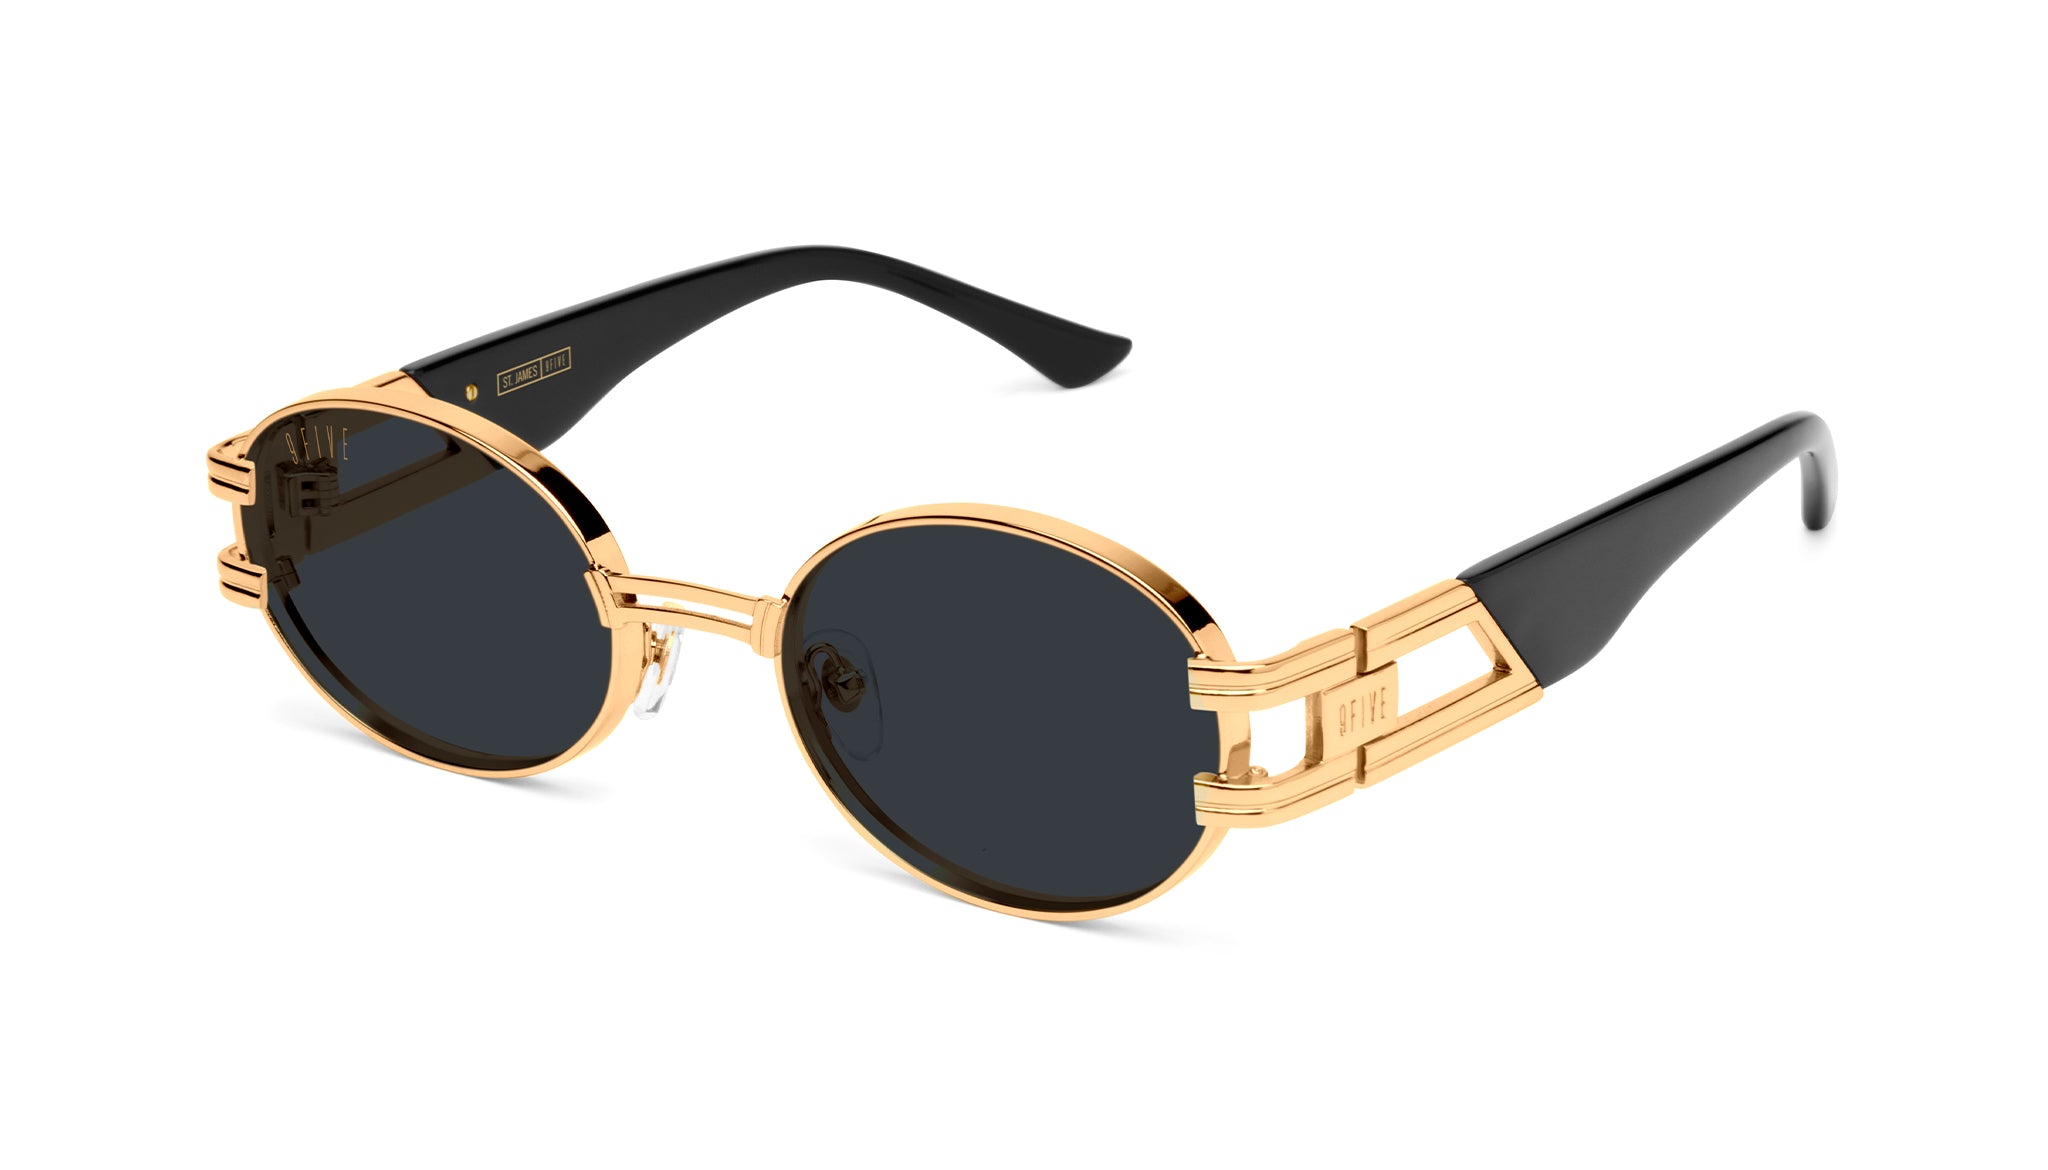 9Five St. James Black & 24K Gold Sunglasses CR-39 (Standard)